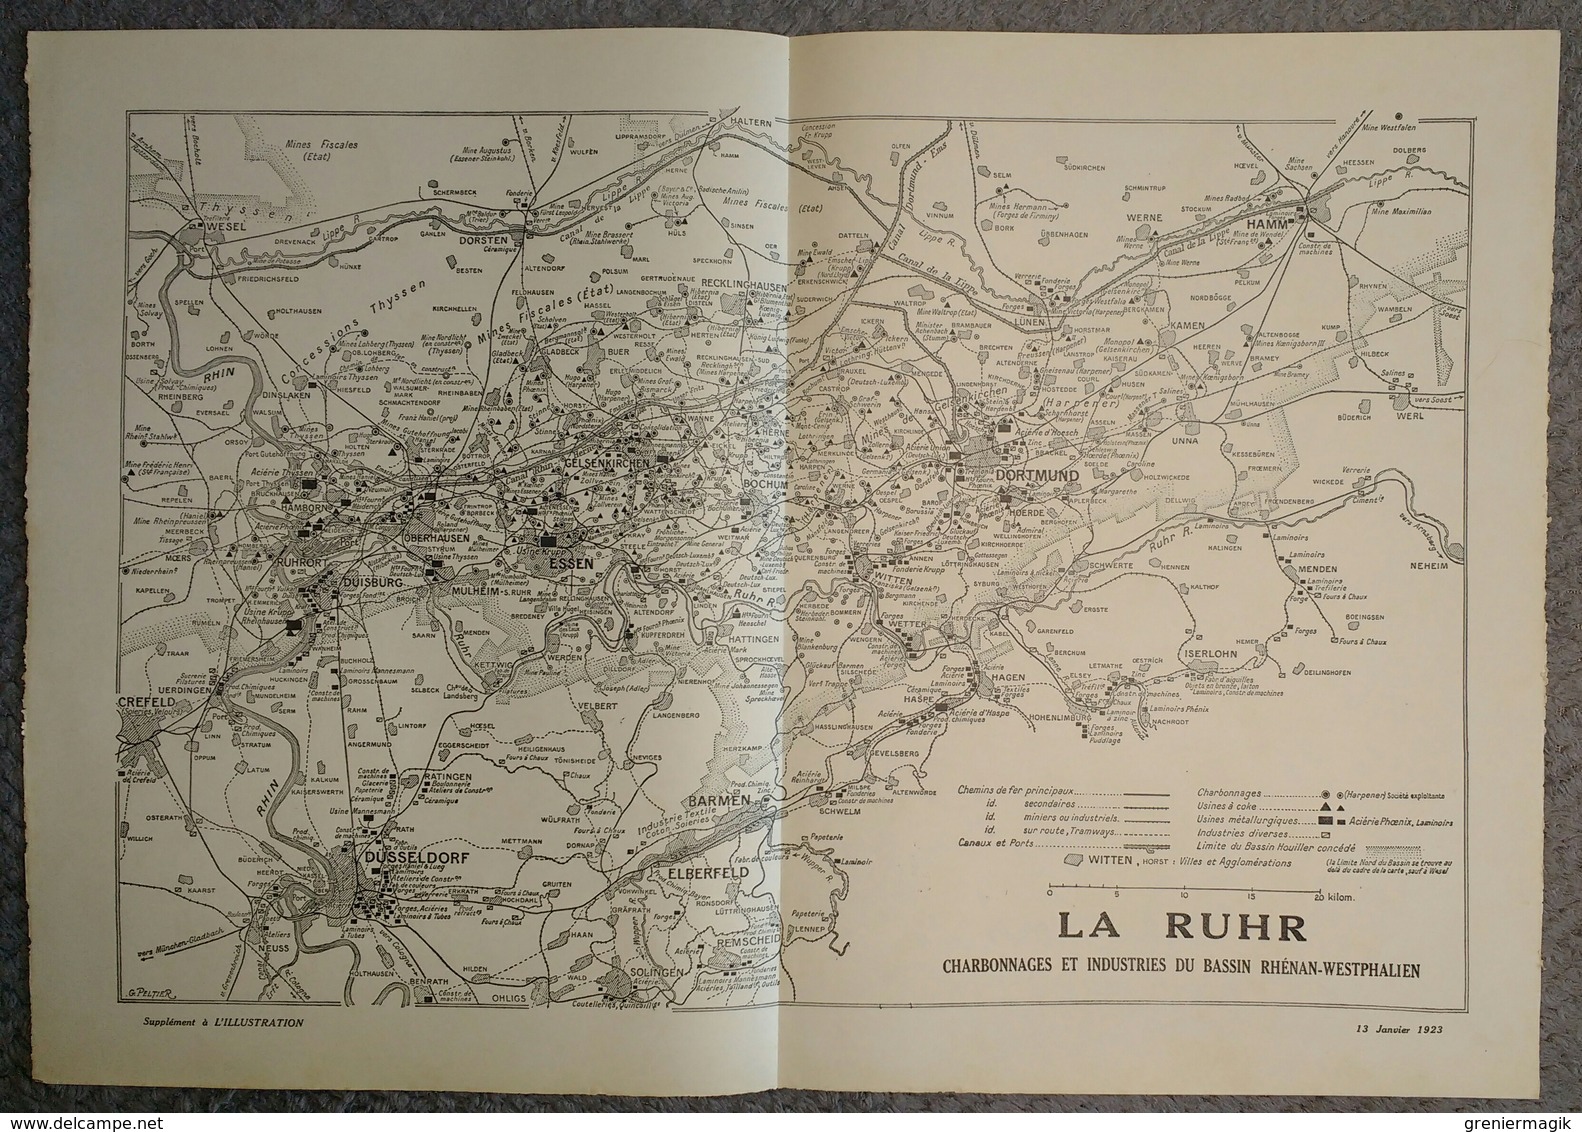 L'Illustration 4167 13 janvier 1923 L'occupation de la Ruhr/Tunnel des Batignolles/Lucien Guitry/Niagara/Howard Carter